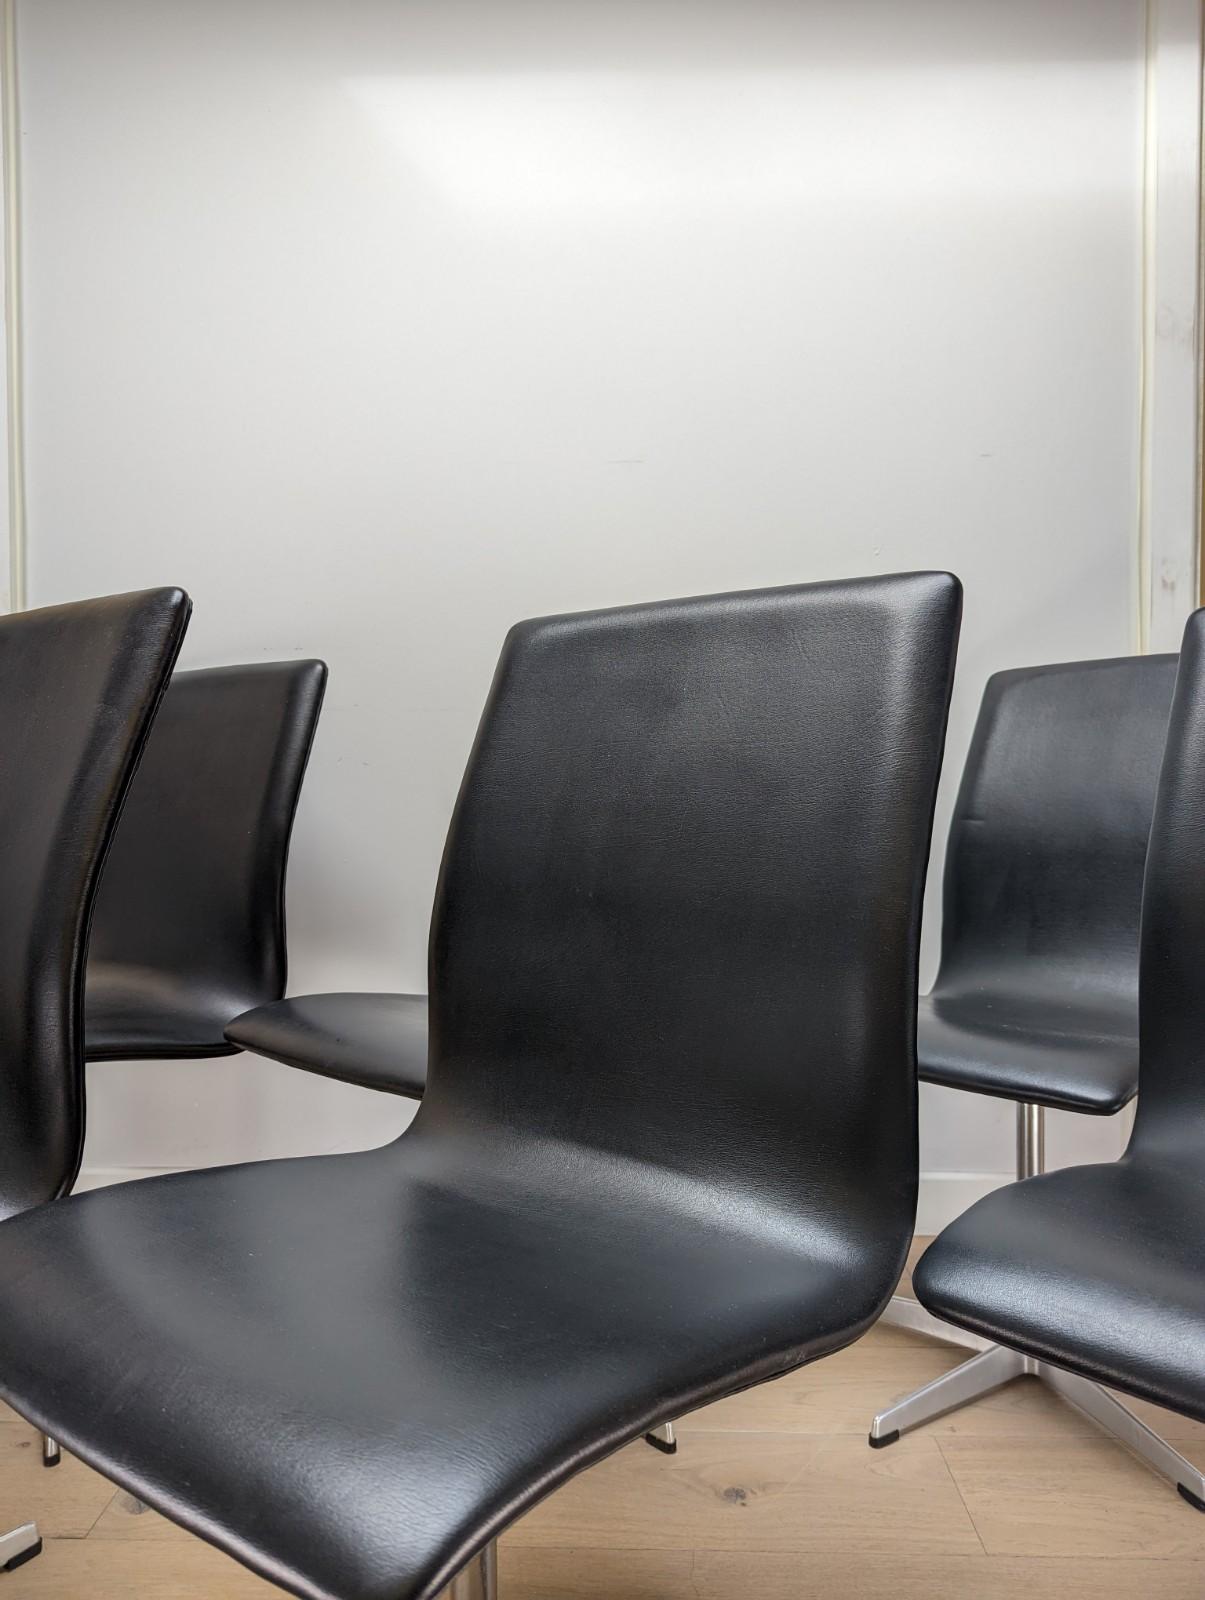 4 x Arne Jacobsen Oxford Chairs by Fritz Hansen, Black Vinyl and Aluminium Legs For Sale 2